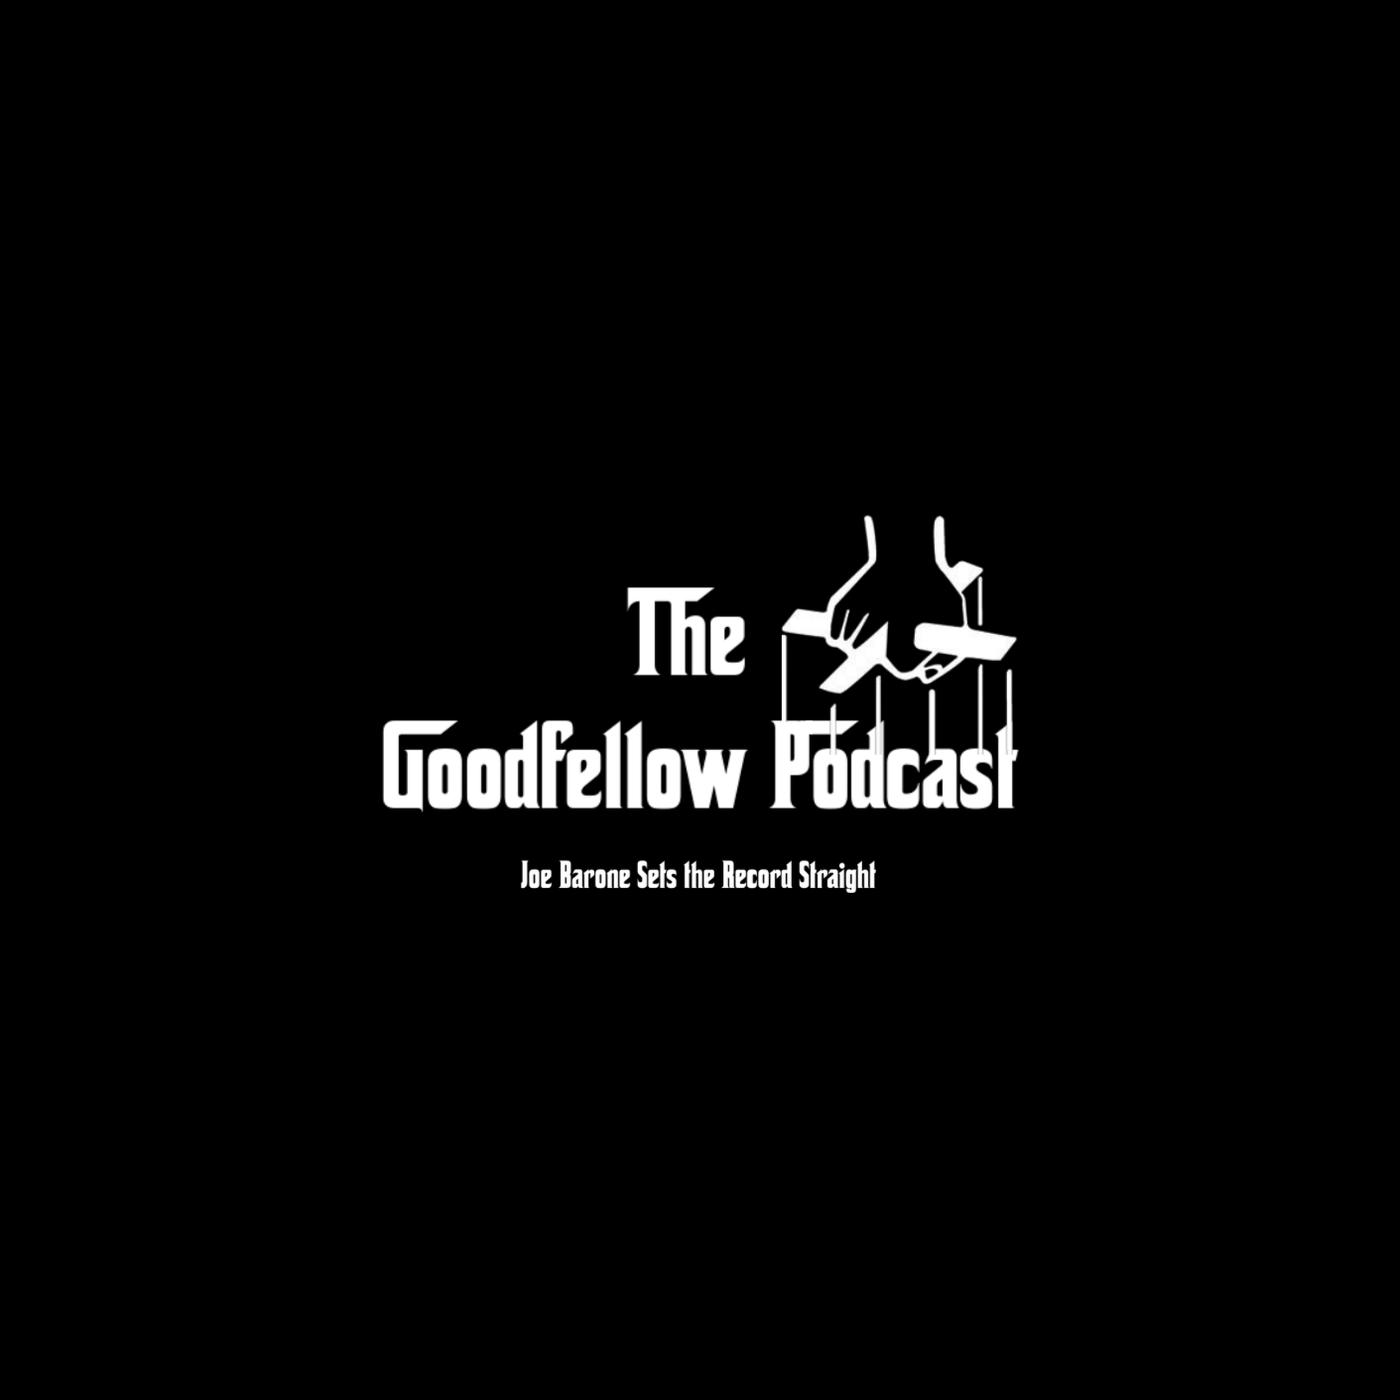 The Goodfellow Podcast - Joe Barone | Listen Notes